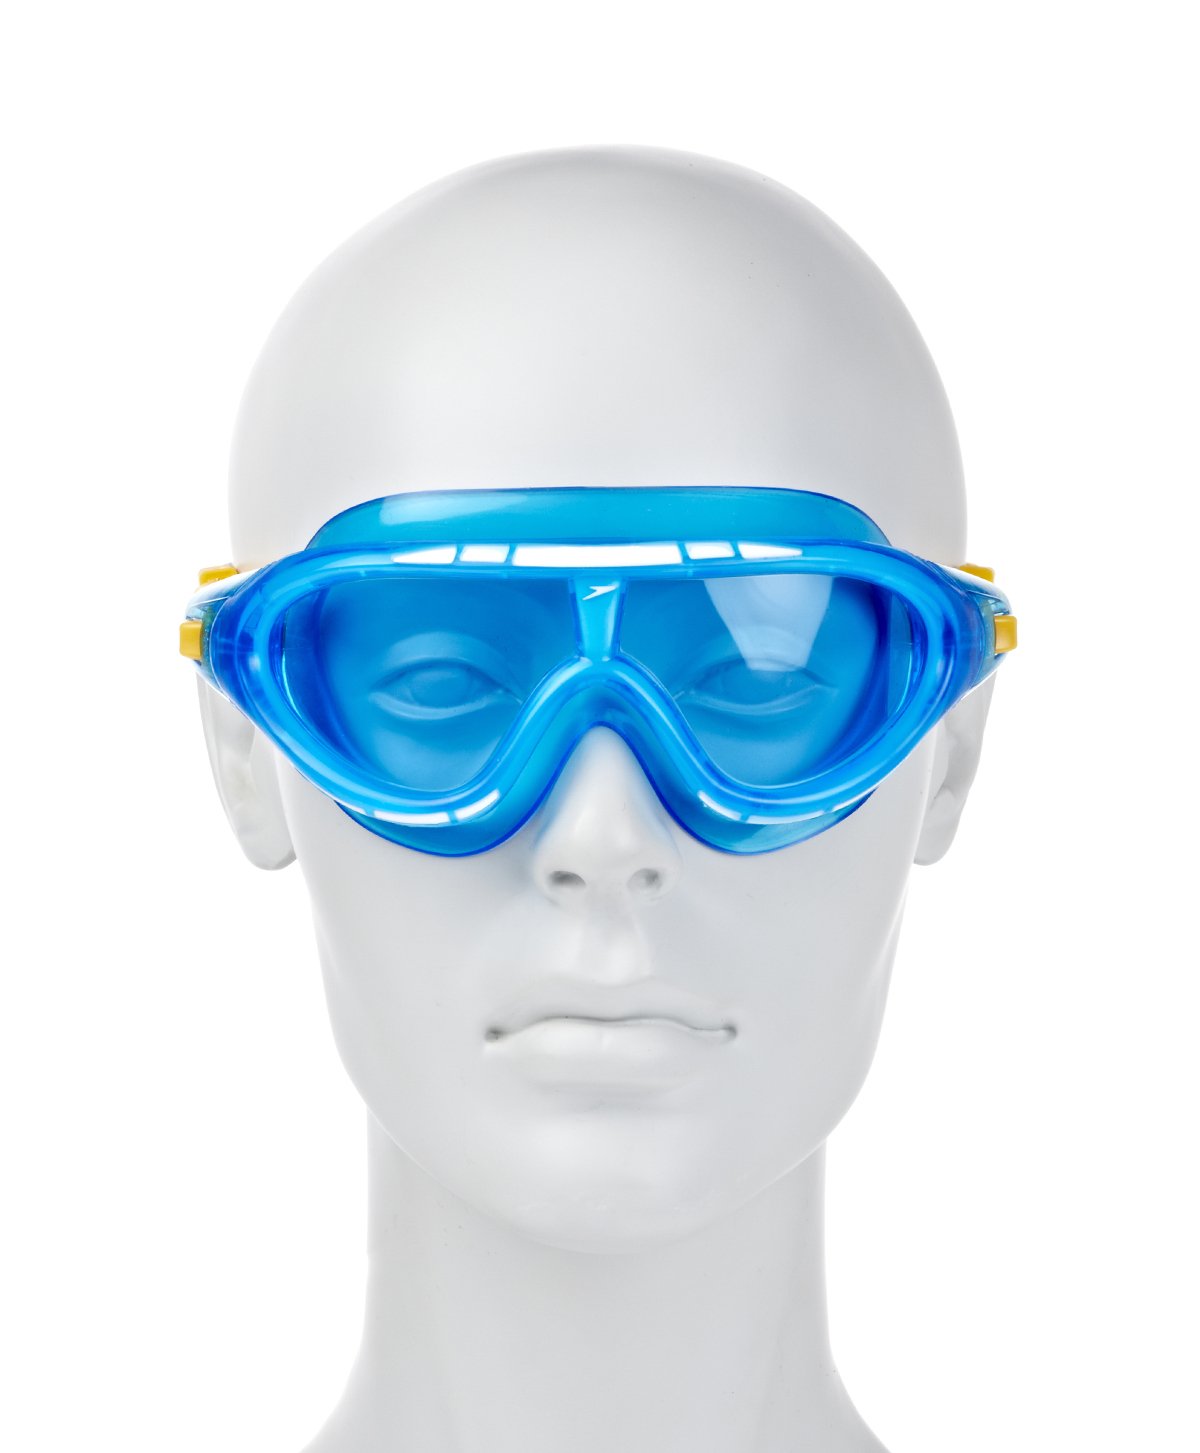 Speedo Unisex - Junior Rift Goggles - Assorted - Best Price online Prokicksports.com